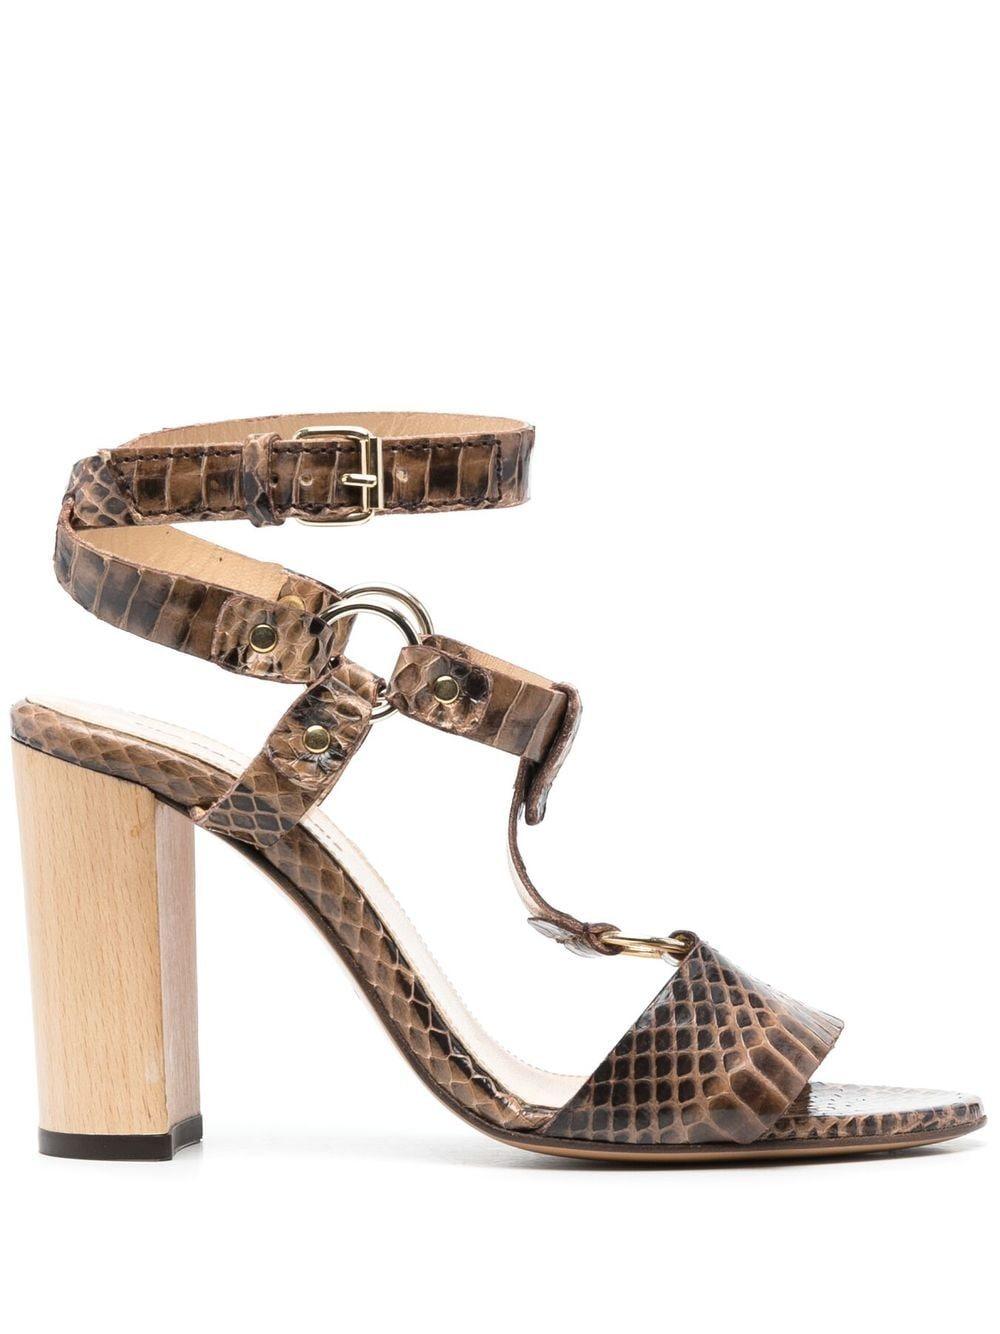 Tila March T-bar Crocodile-effect Sandals in Metallic | Lyst